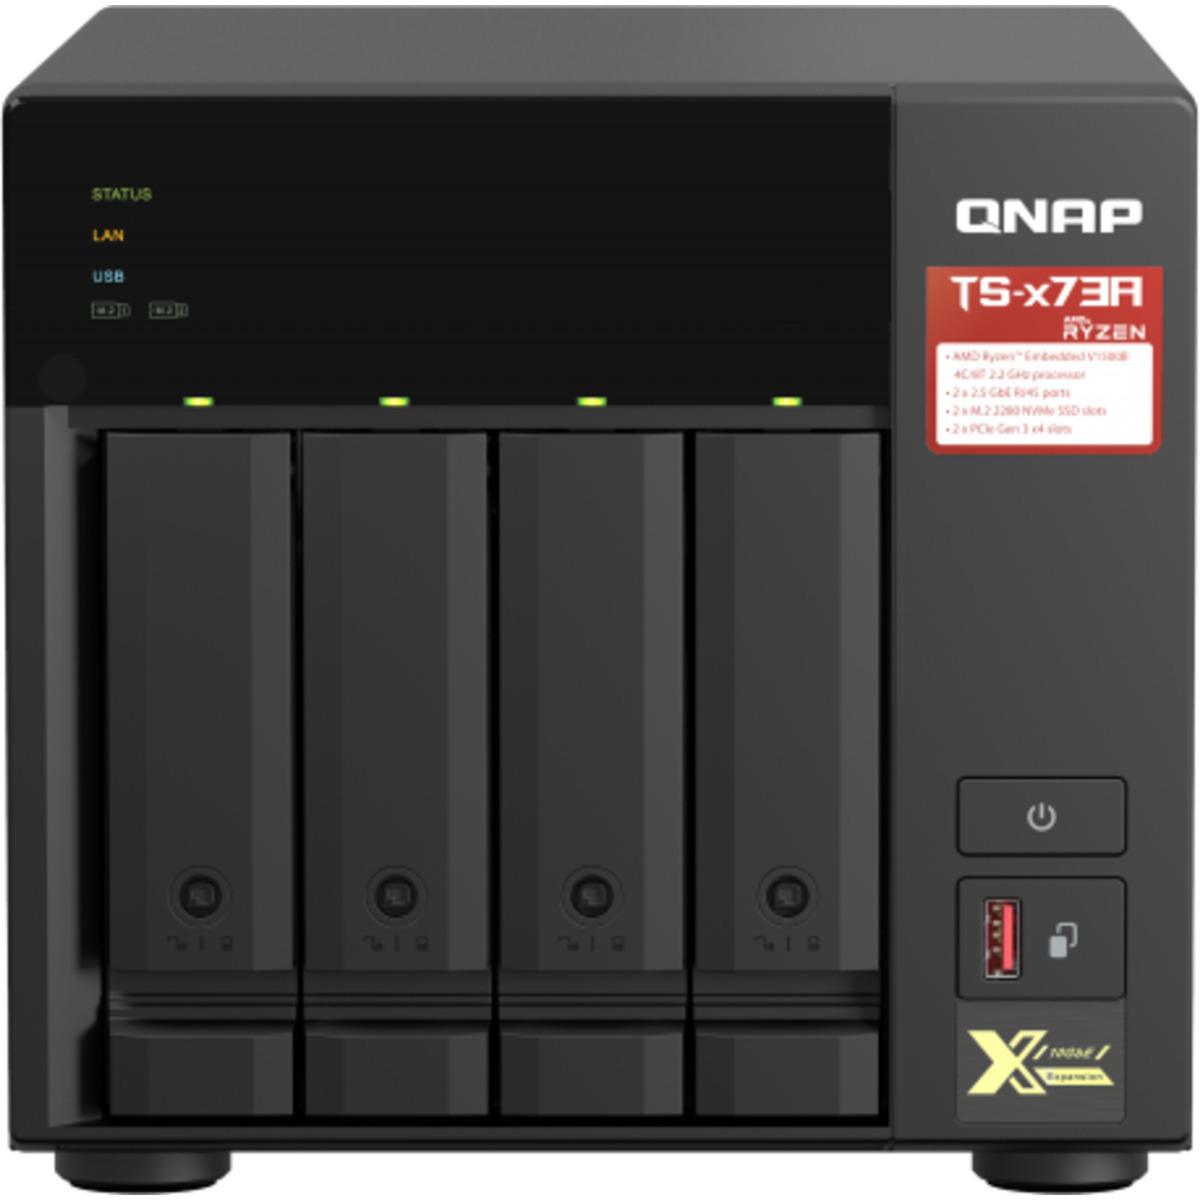 QNAP TS-473A 12tb 4-Bay Desktop Multimedia / Power User / Business NAS - Network Attached Storage Device 3x4tb Western Digital Gold WD4003FRYZ 3.5 7200rpm SATA 6Gb/s HDD ENTERPRISE Class Drives Installed - Burn-In Tested TS-473A